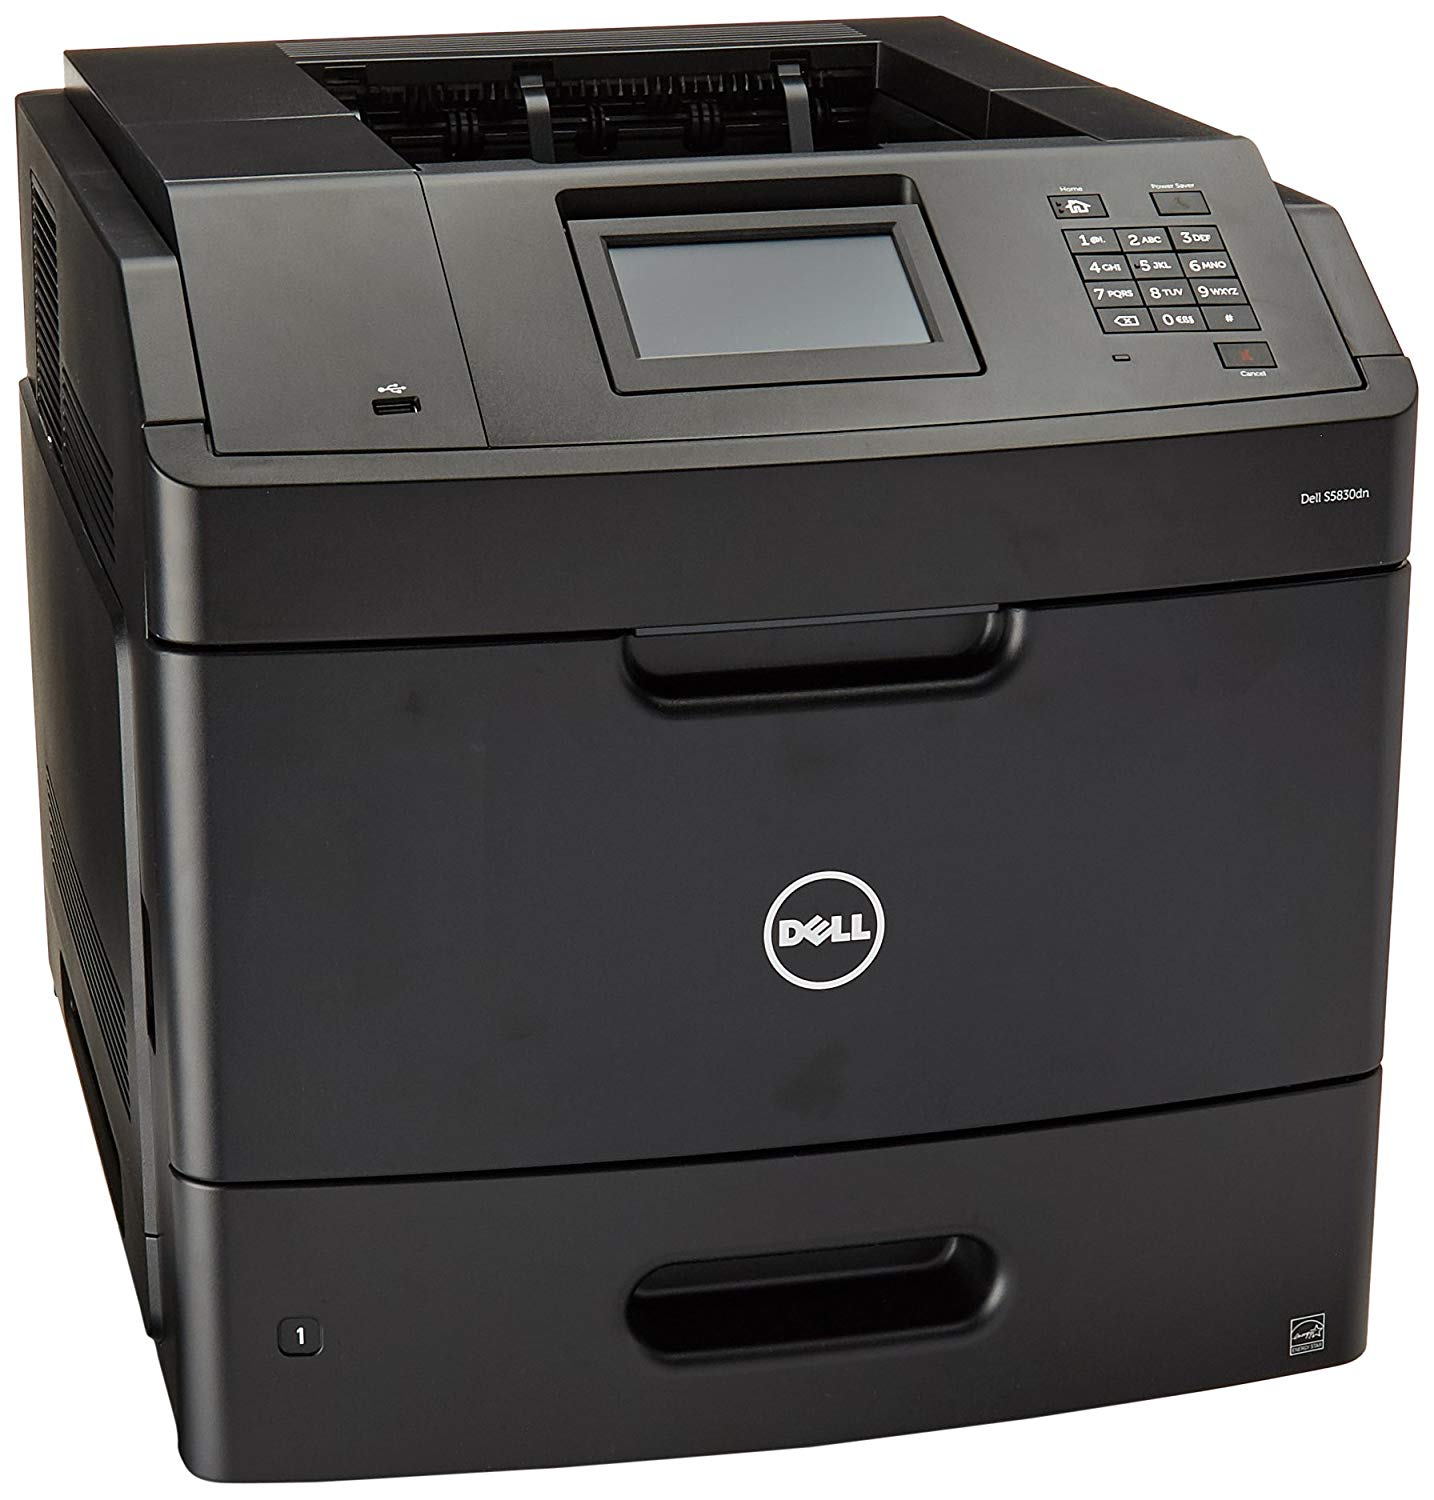 Dell S5830dn Workgroup 63PPM 600x600DPI Smart Printer